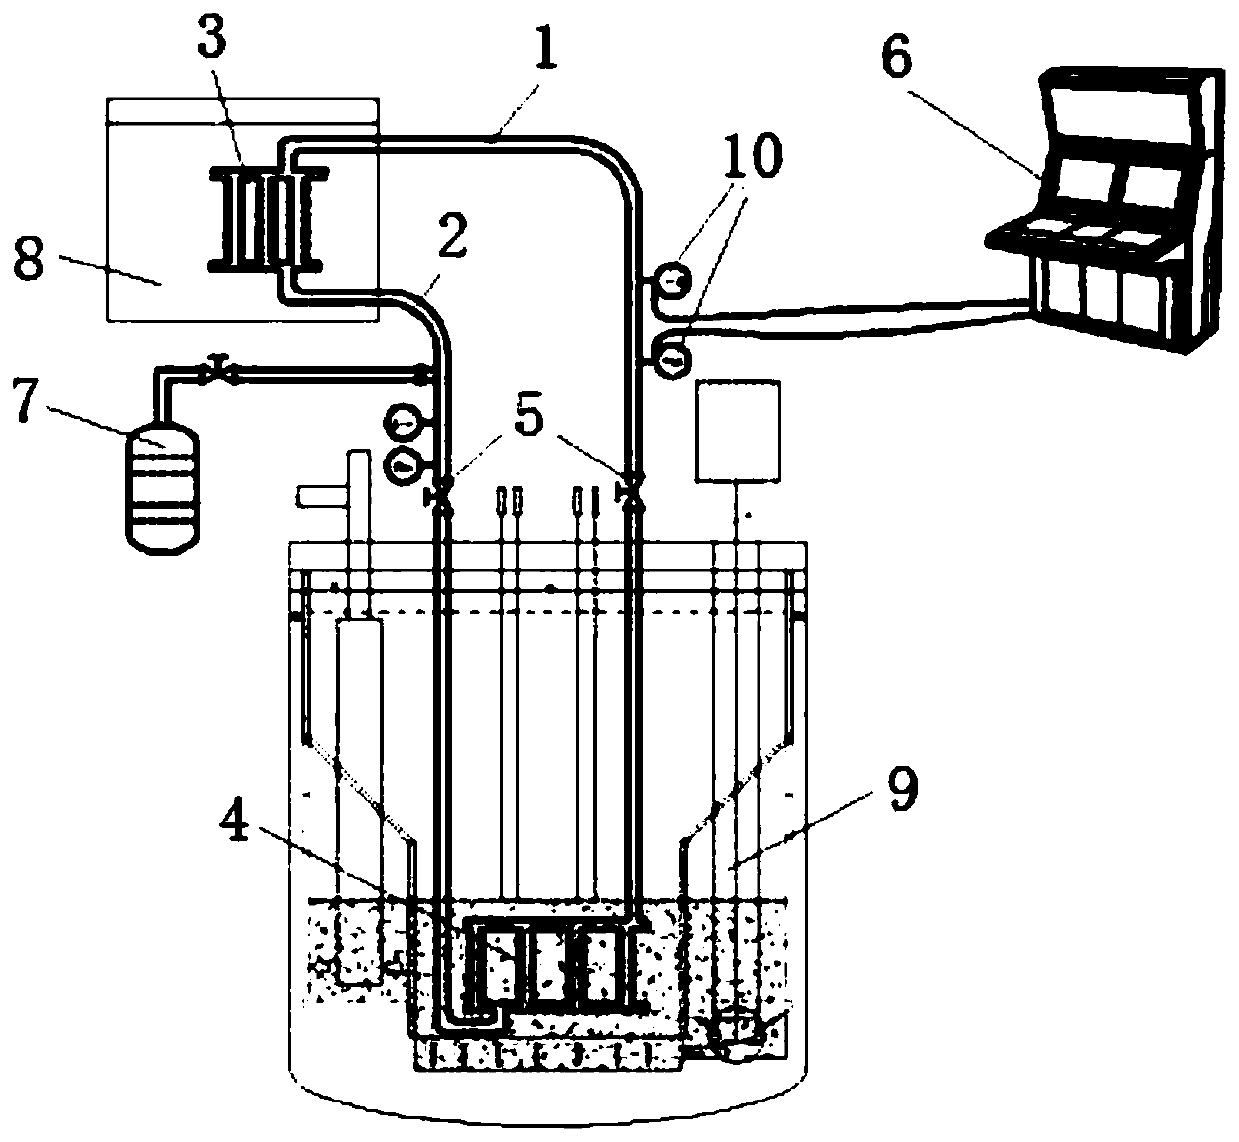 Marine heat-pipe-type lead-bismuth reactor waste heat discharge system